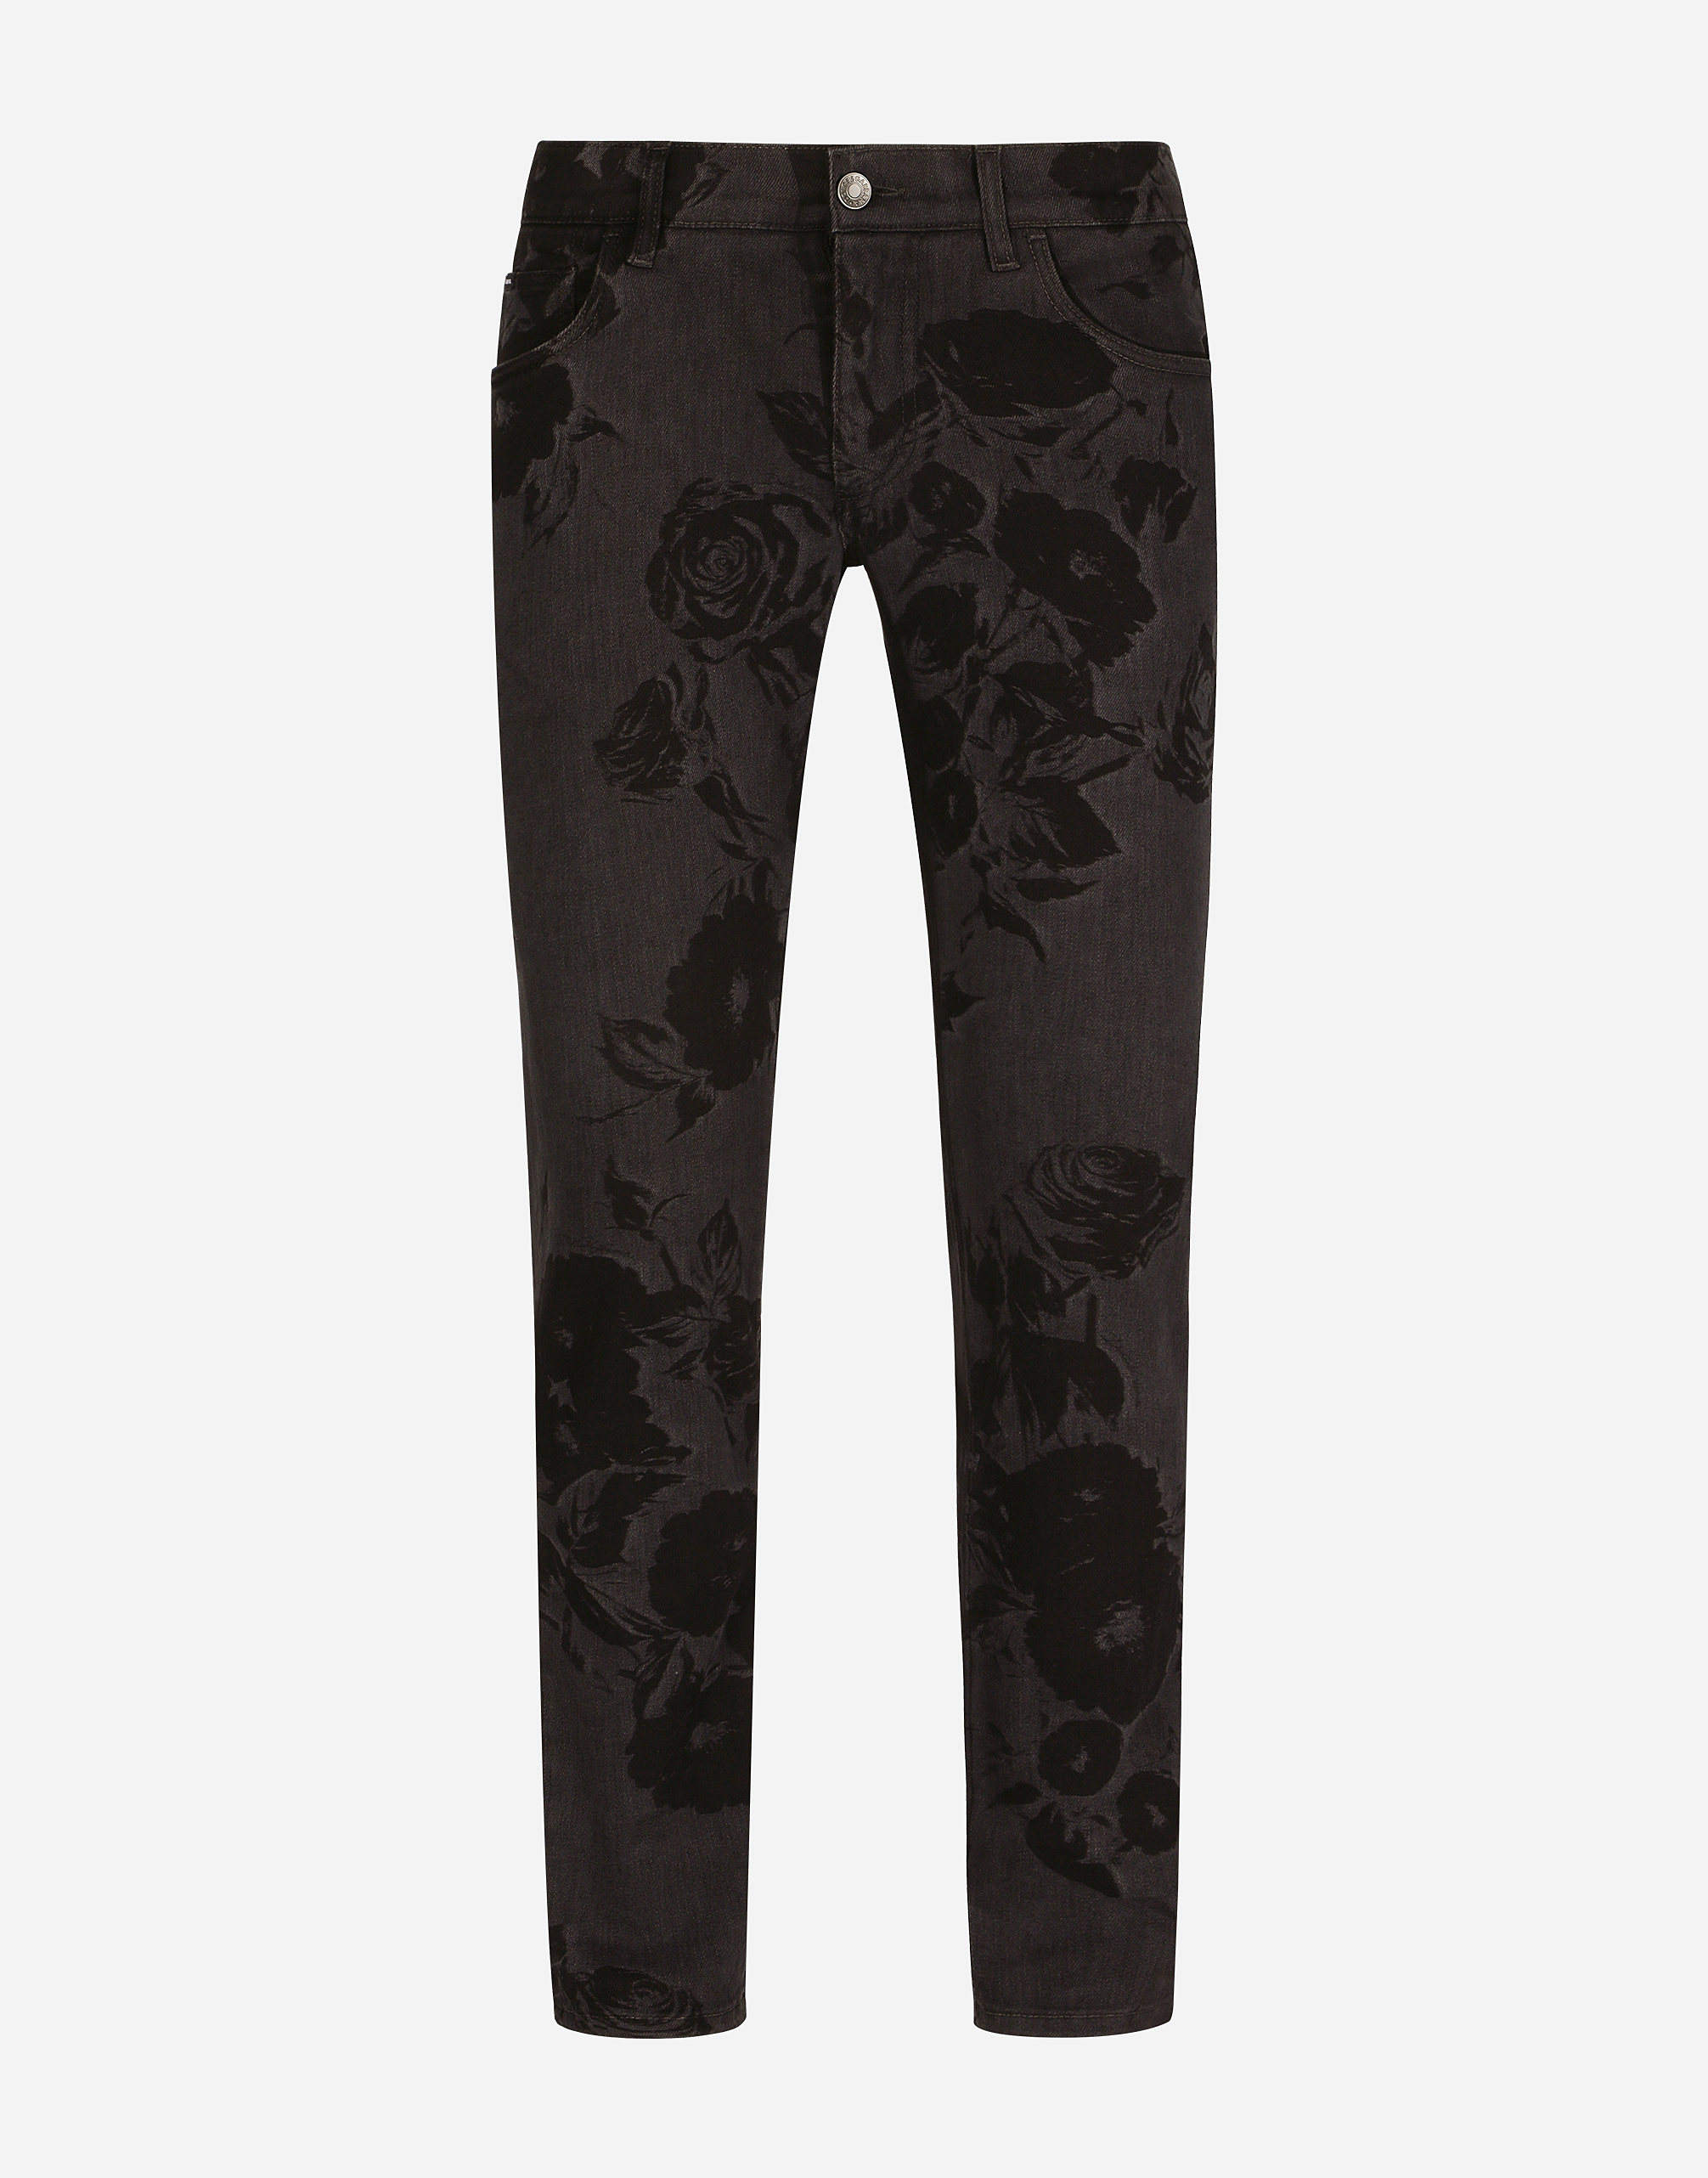 Black skinny jeans with laser-etched rose design in Multicolor